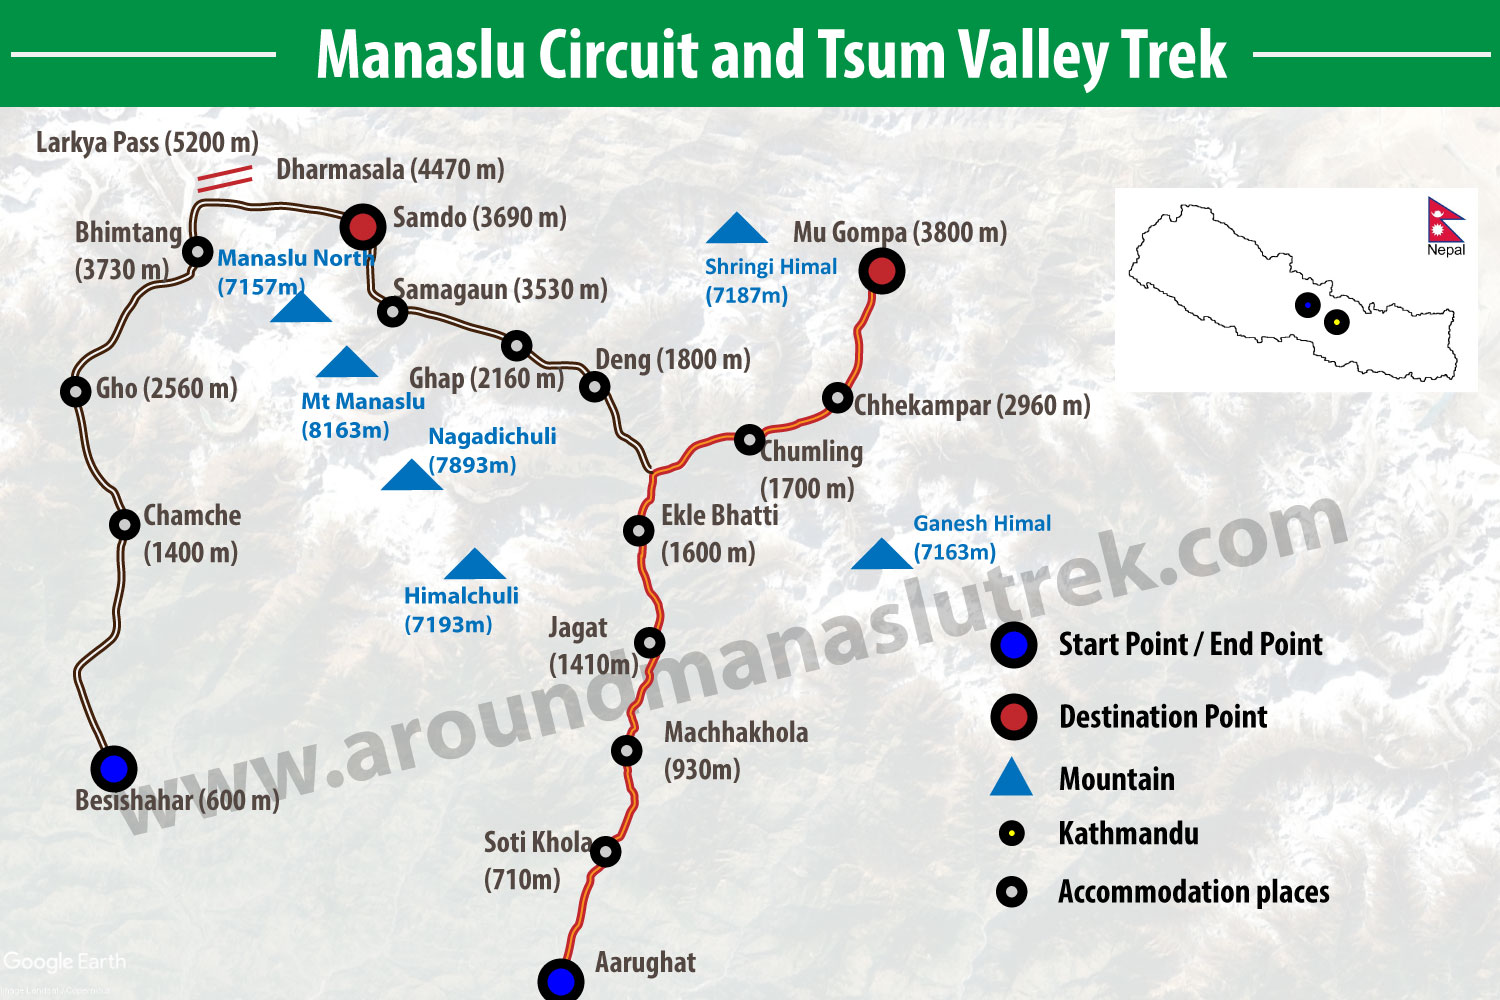 Manaslu circuit and tsum valley trek map